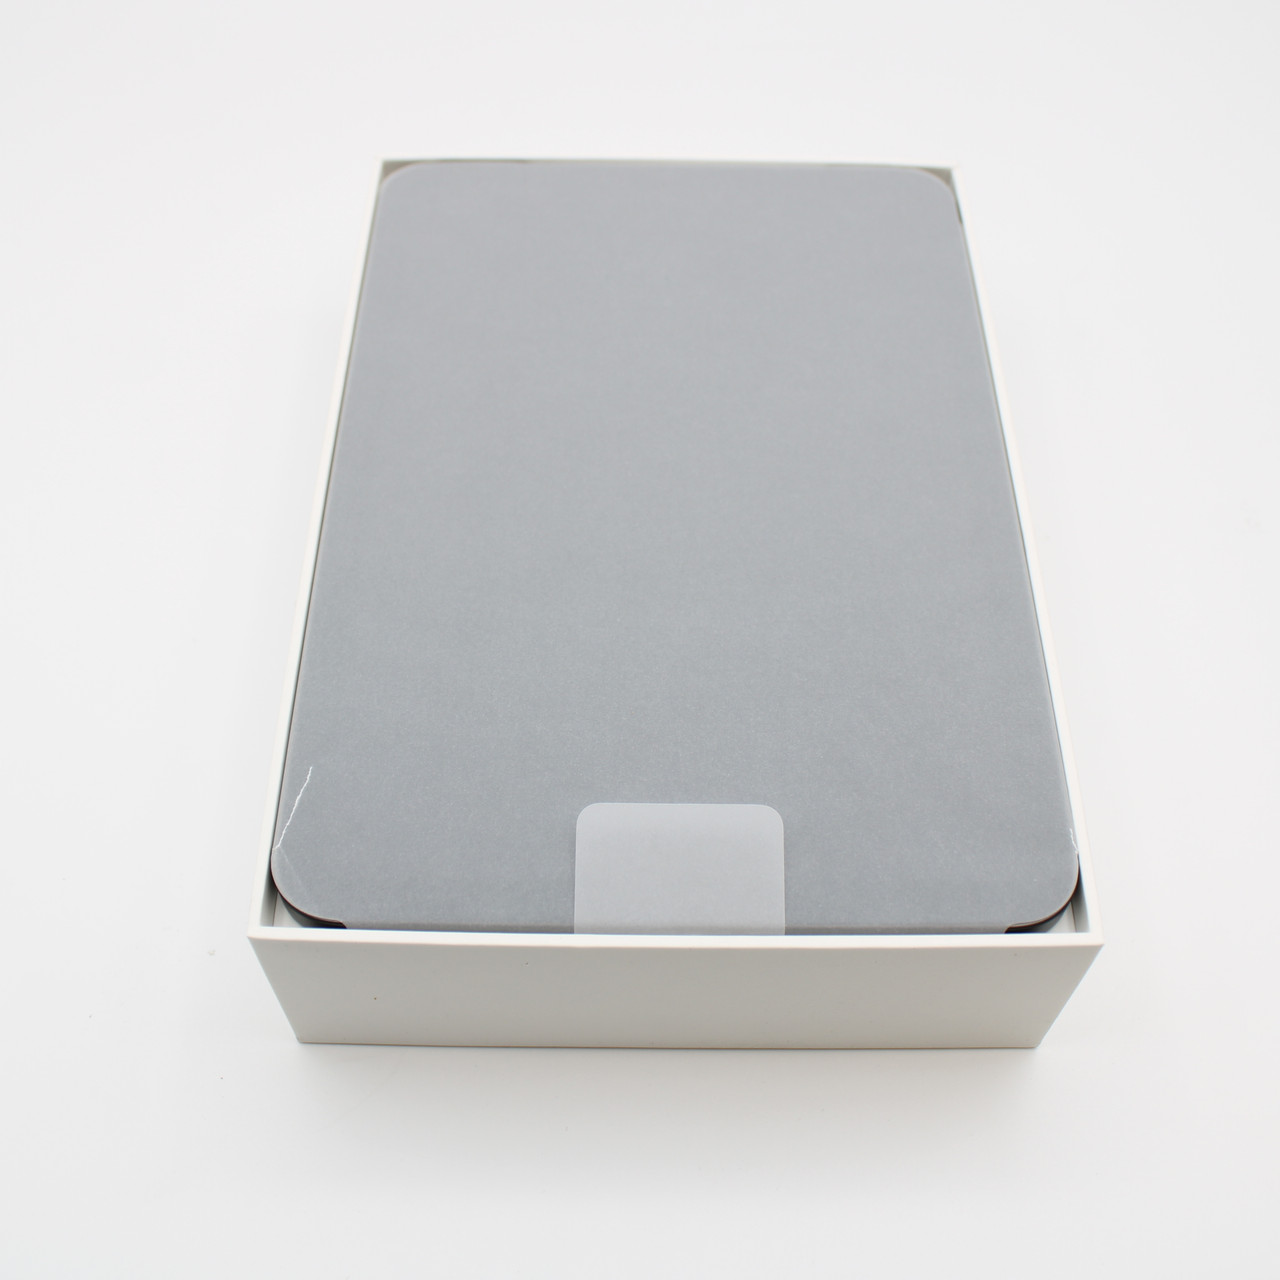 APPLE iPad mini 6th Gen Wi-Fi A2567 - 64 GB, SPACE GRAY - NEW OPEN BOX